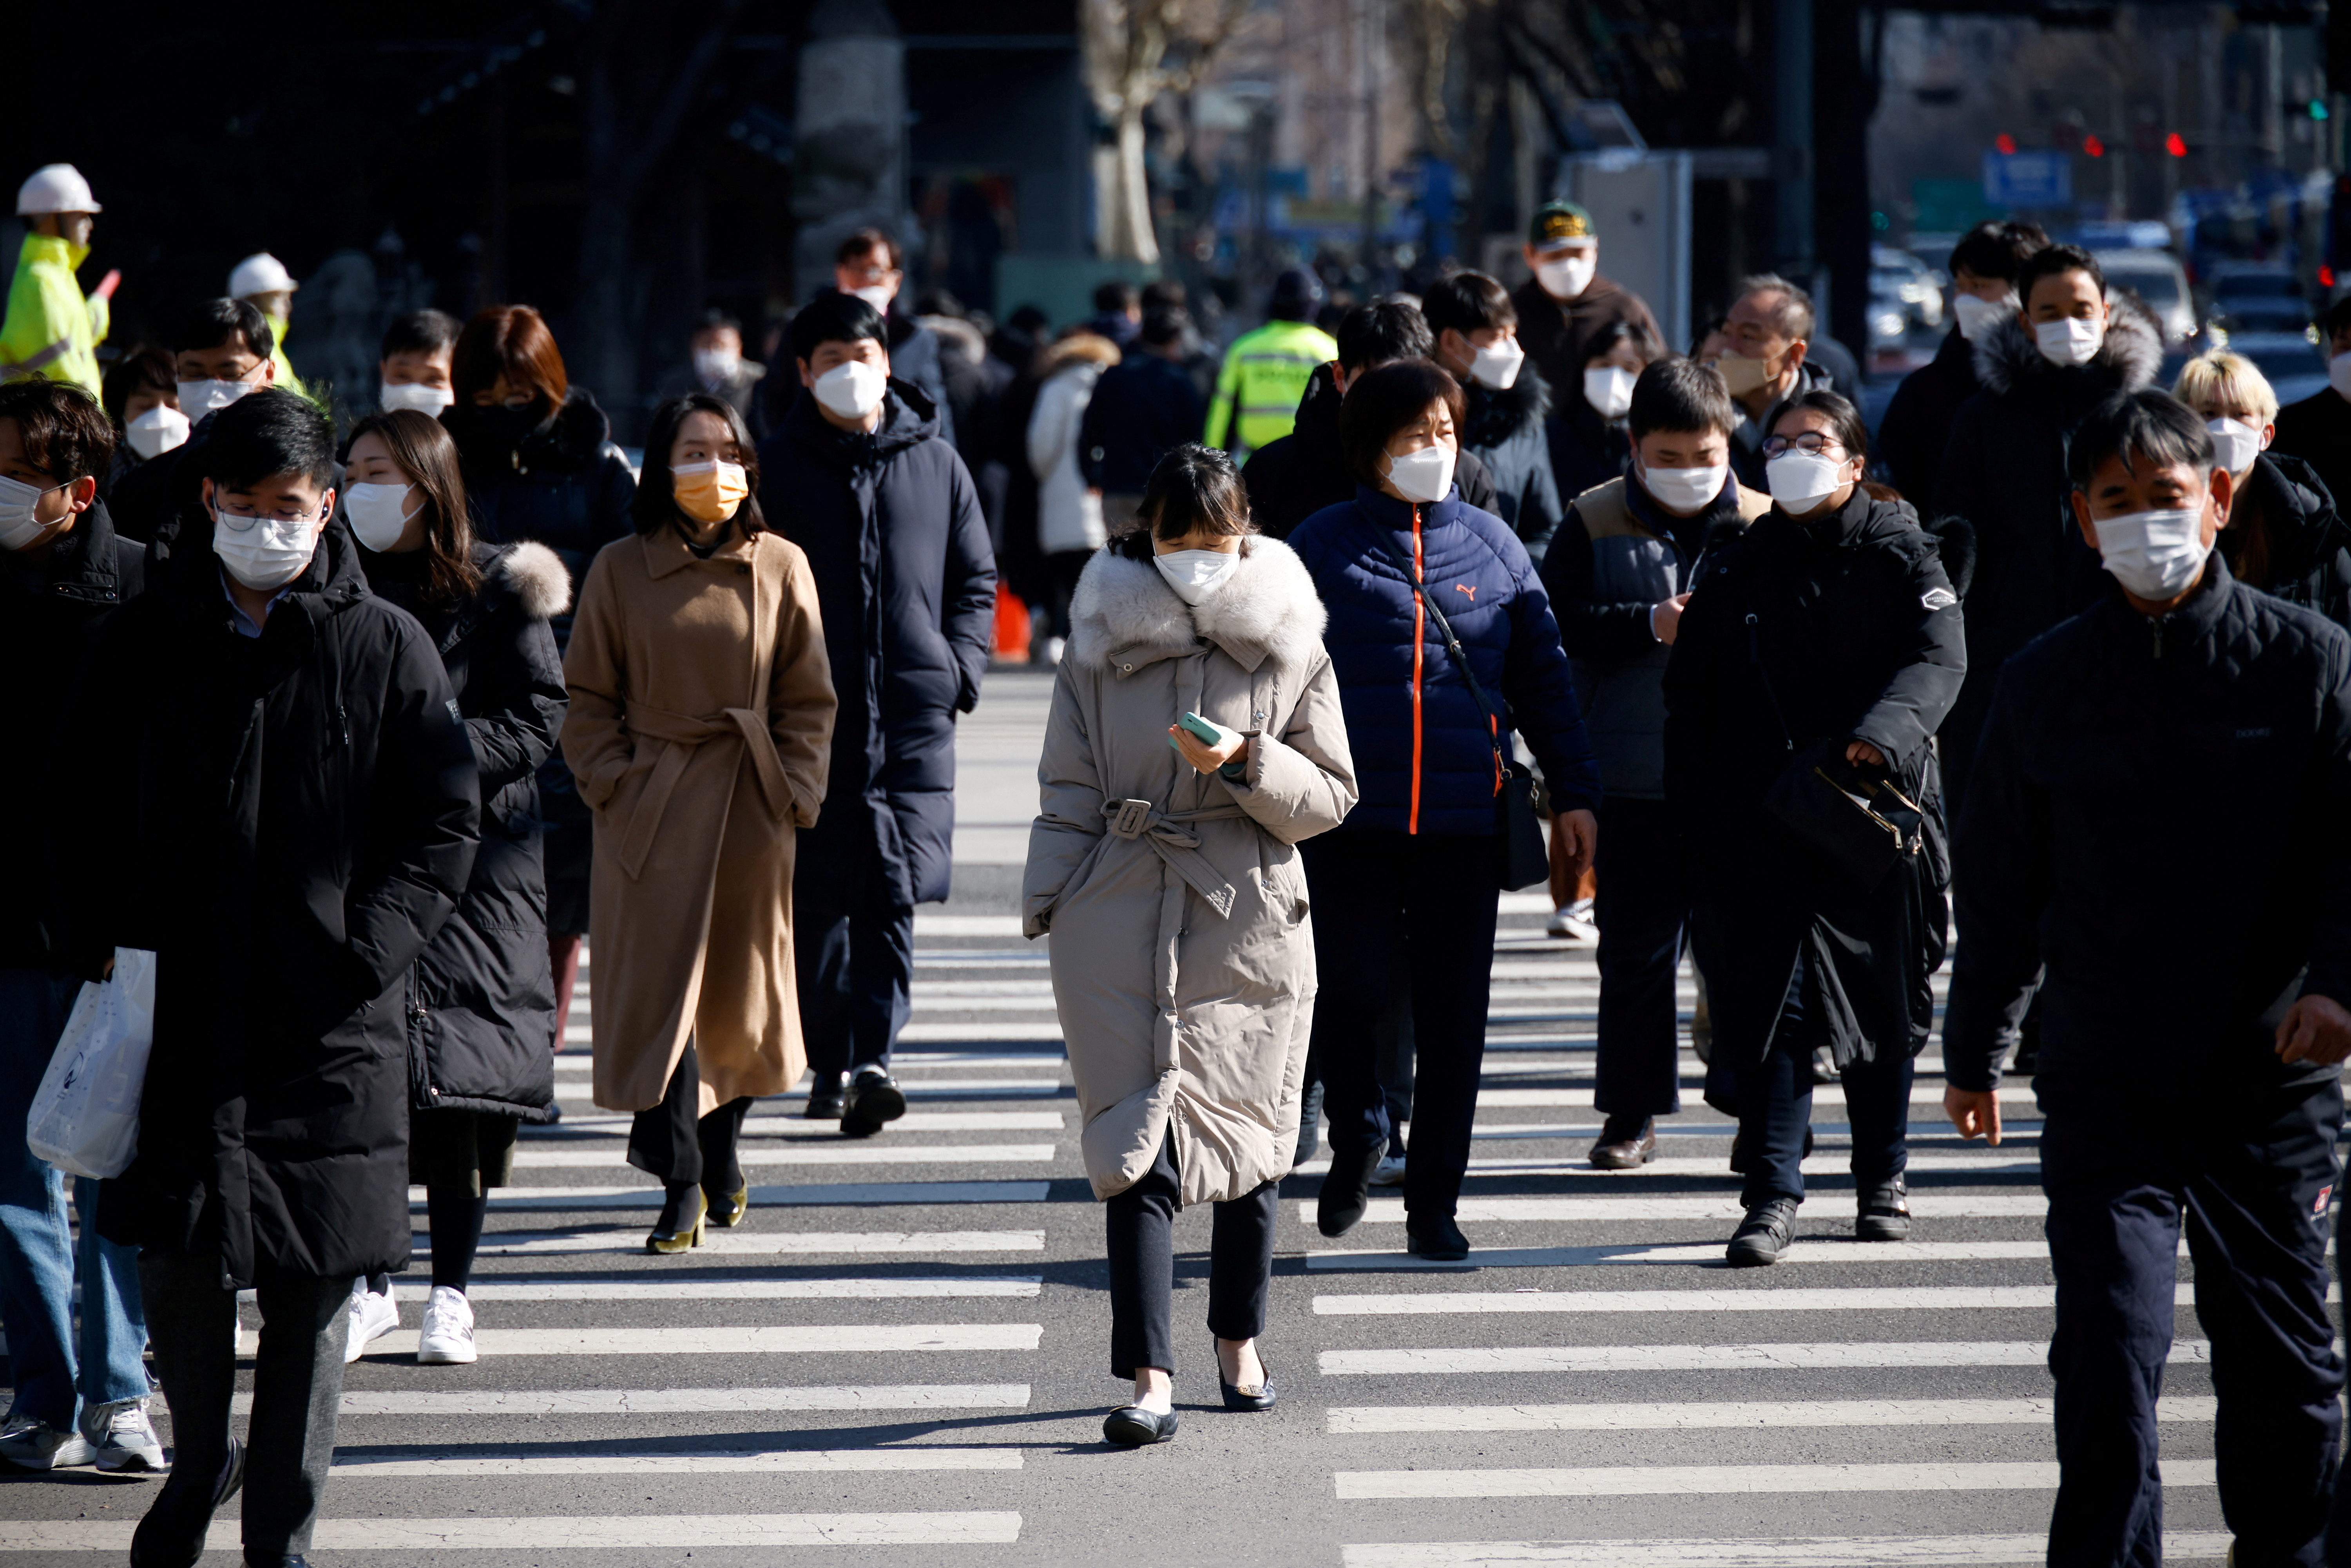 Commuters cross a zebra crossing, amid the coronavirus disease (COVID-19) pandemic in Seoul